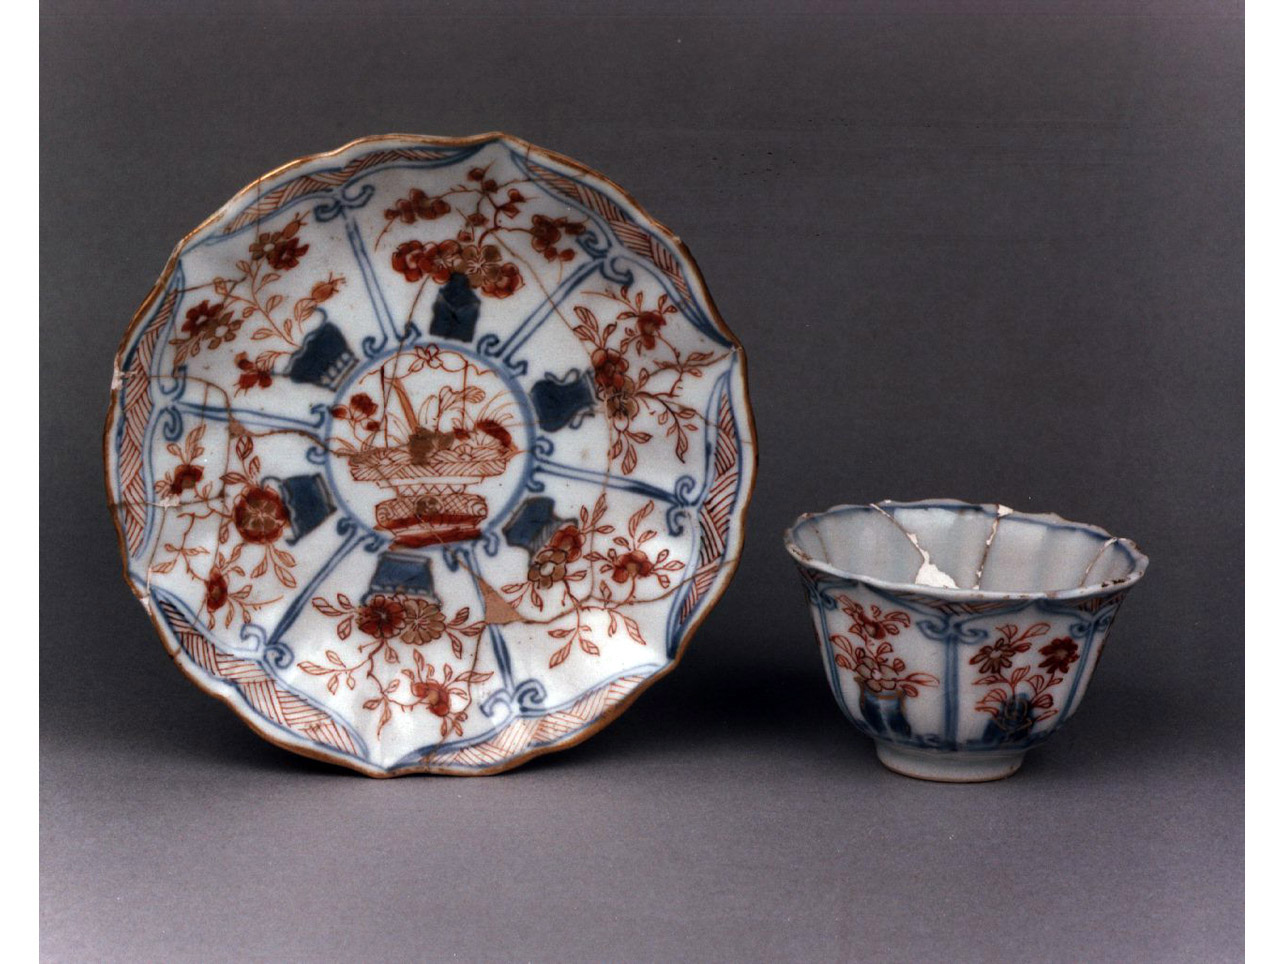 motivi decorativi floreali (piattino) - manifattura cinese (secc. XVII/ XVIII)